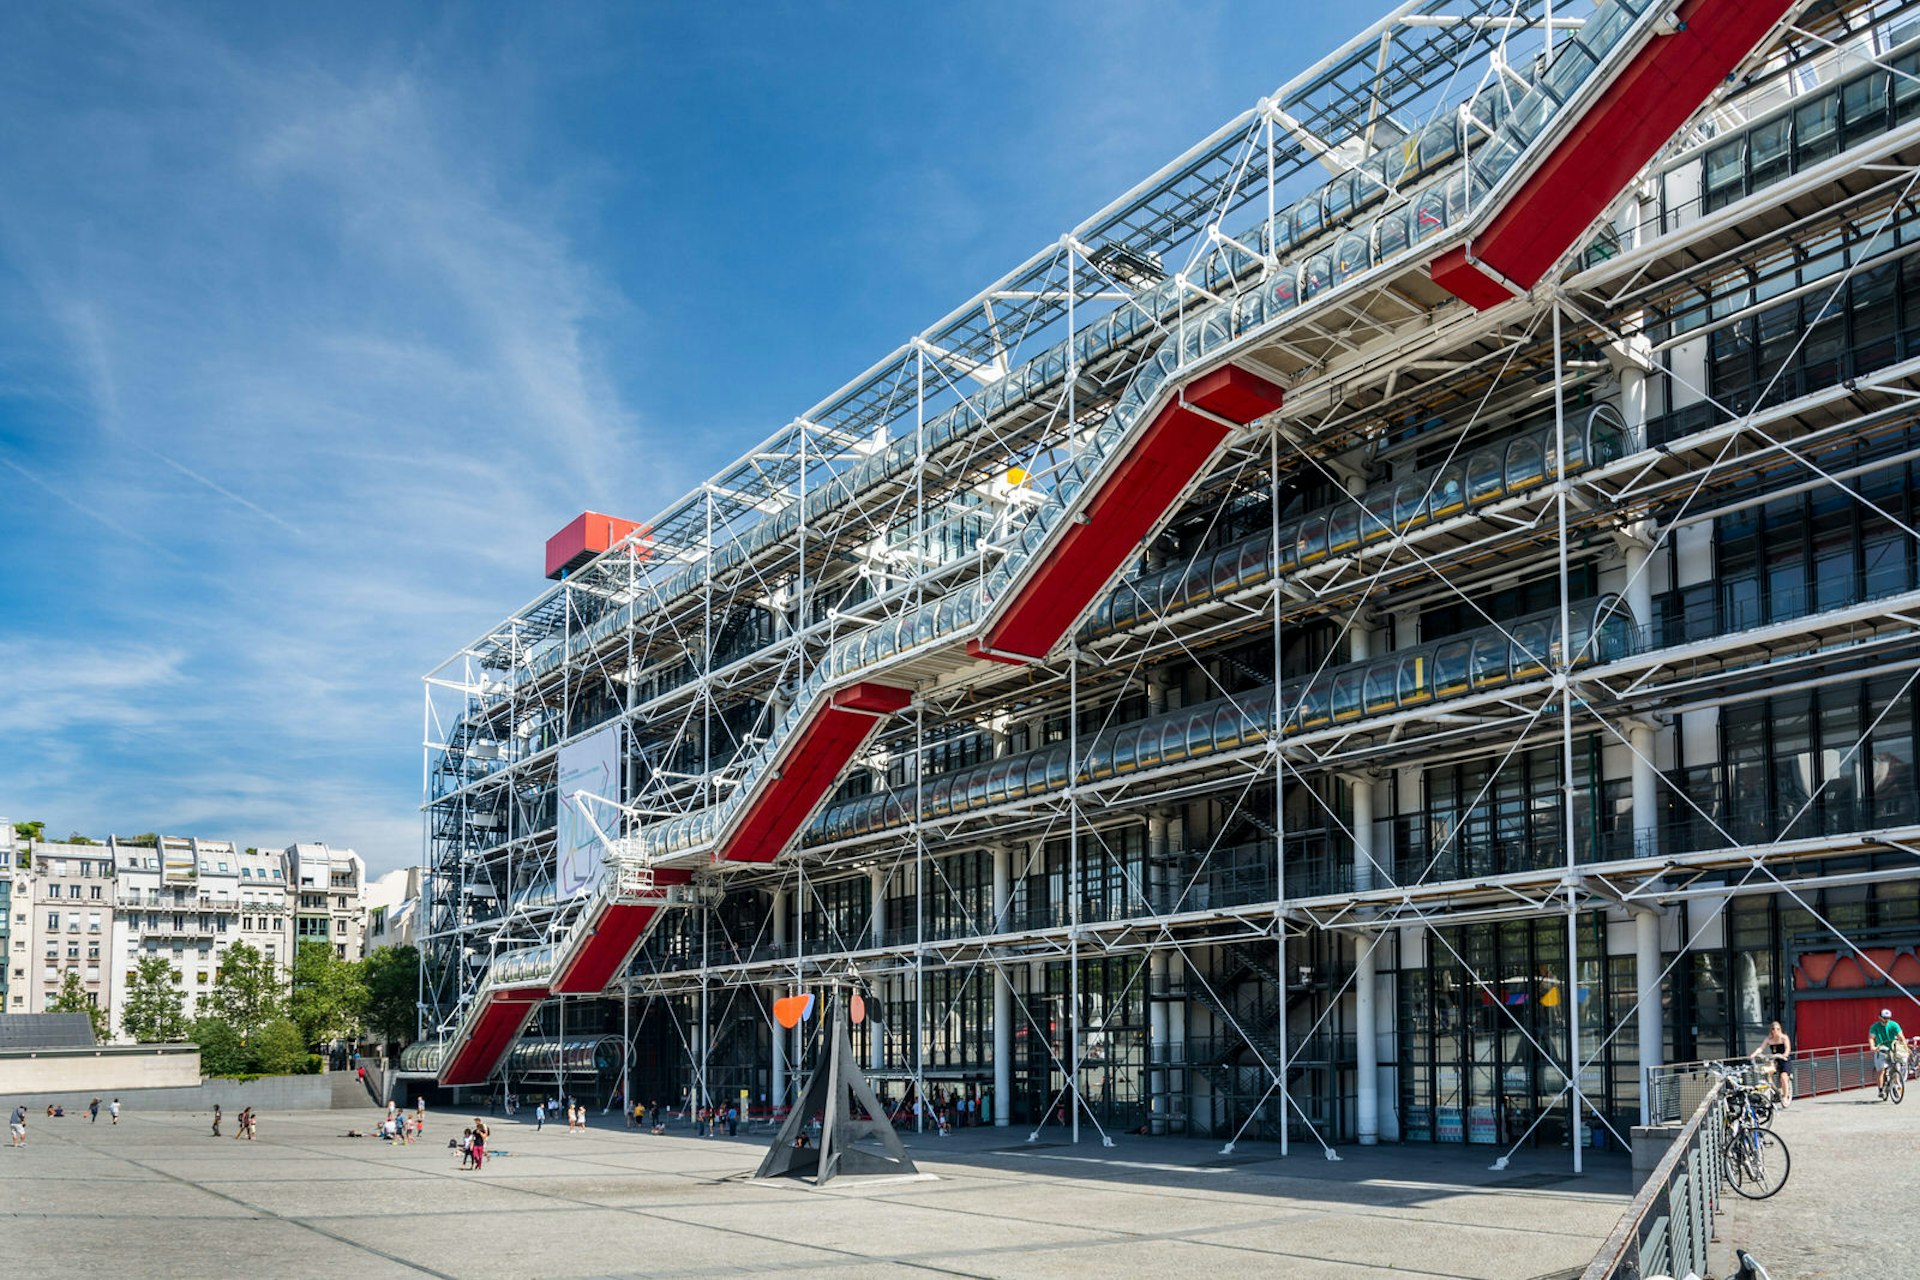 The exterior of Centre Pompidou in Paris, France